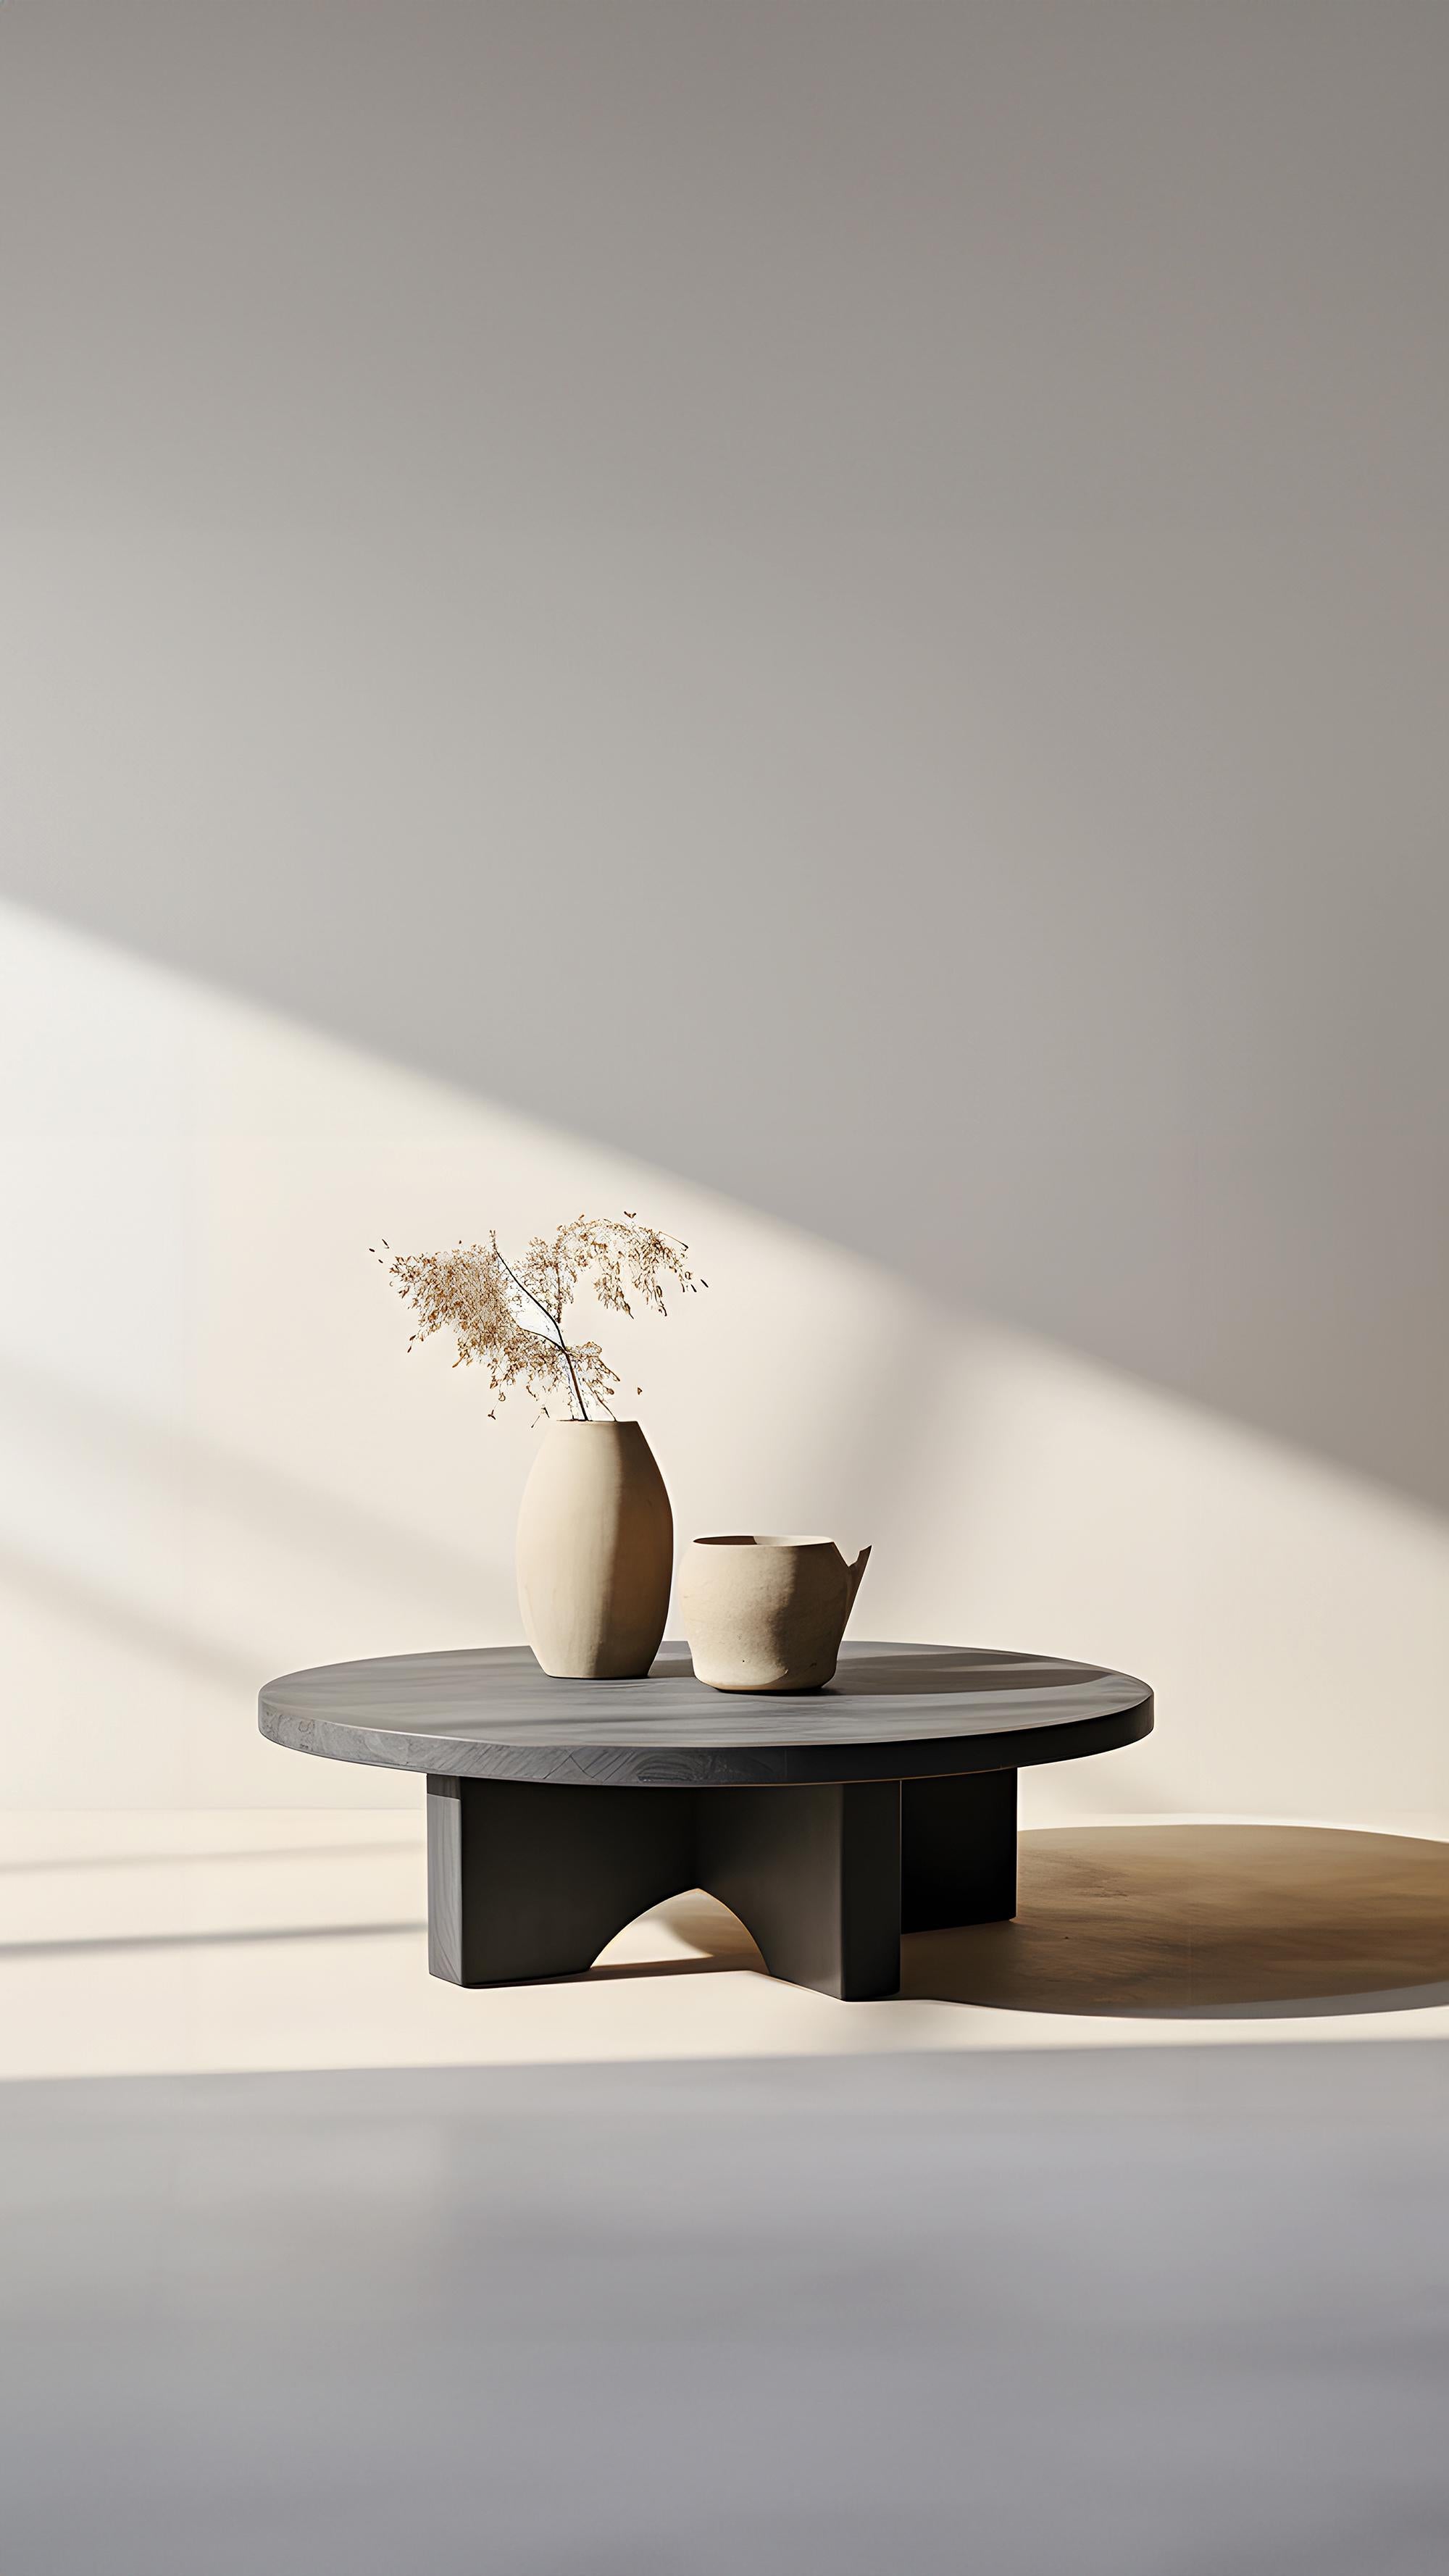 Hardwood Low-Set Round Coffee Table - Dark Finish Fundamenta 42 by NONO For Sale